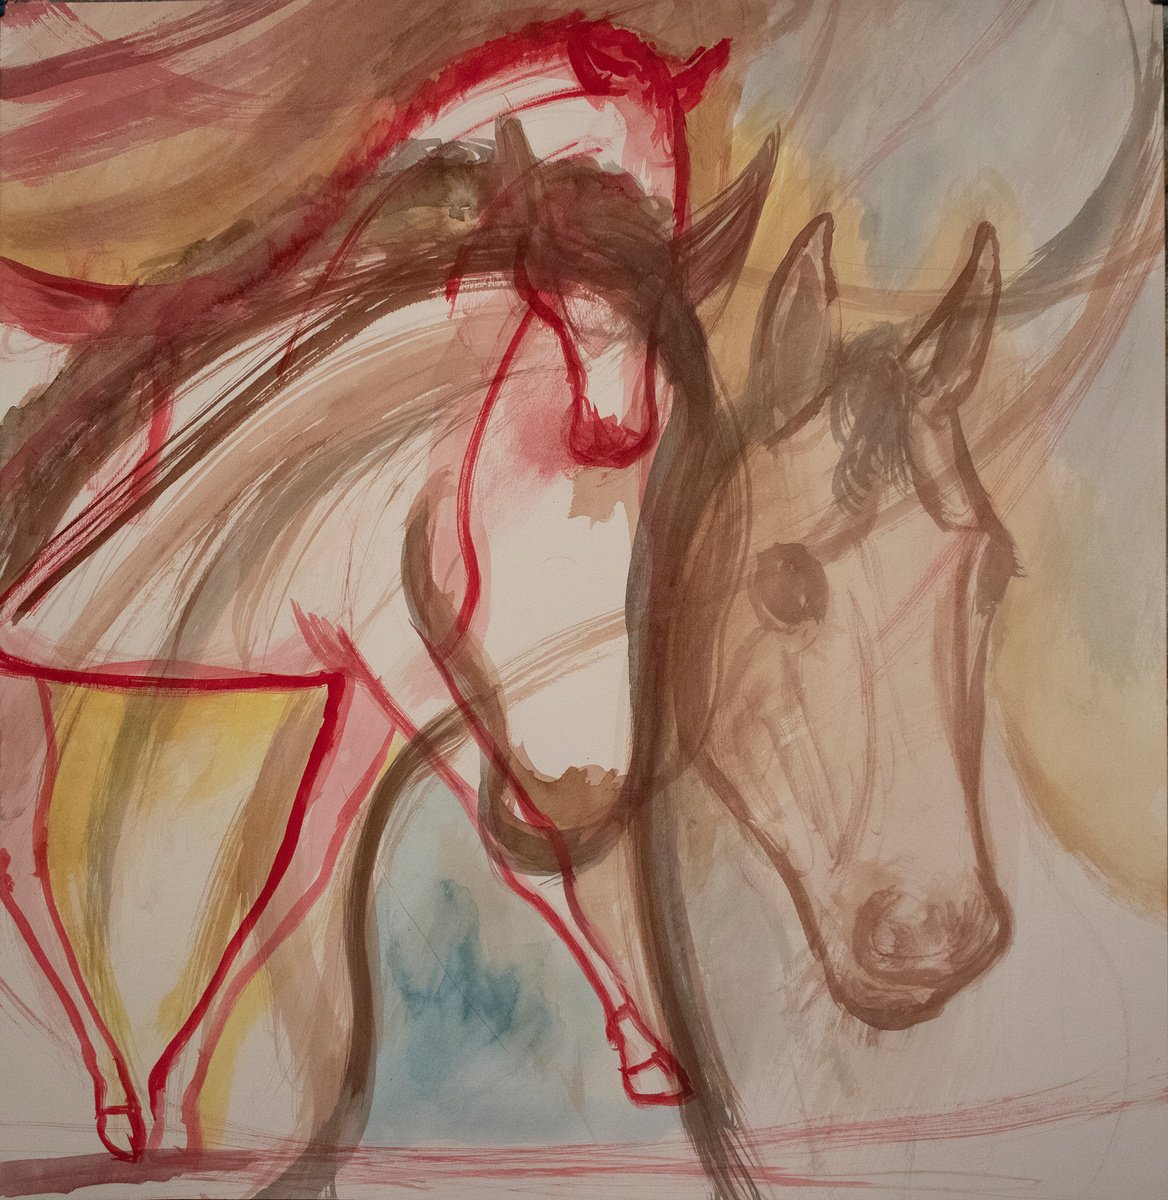 Dressage horses movement, dynamic horse sketch by Ren Goorman